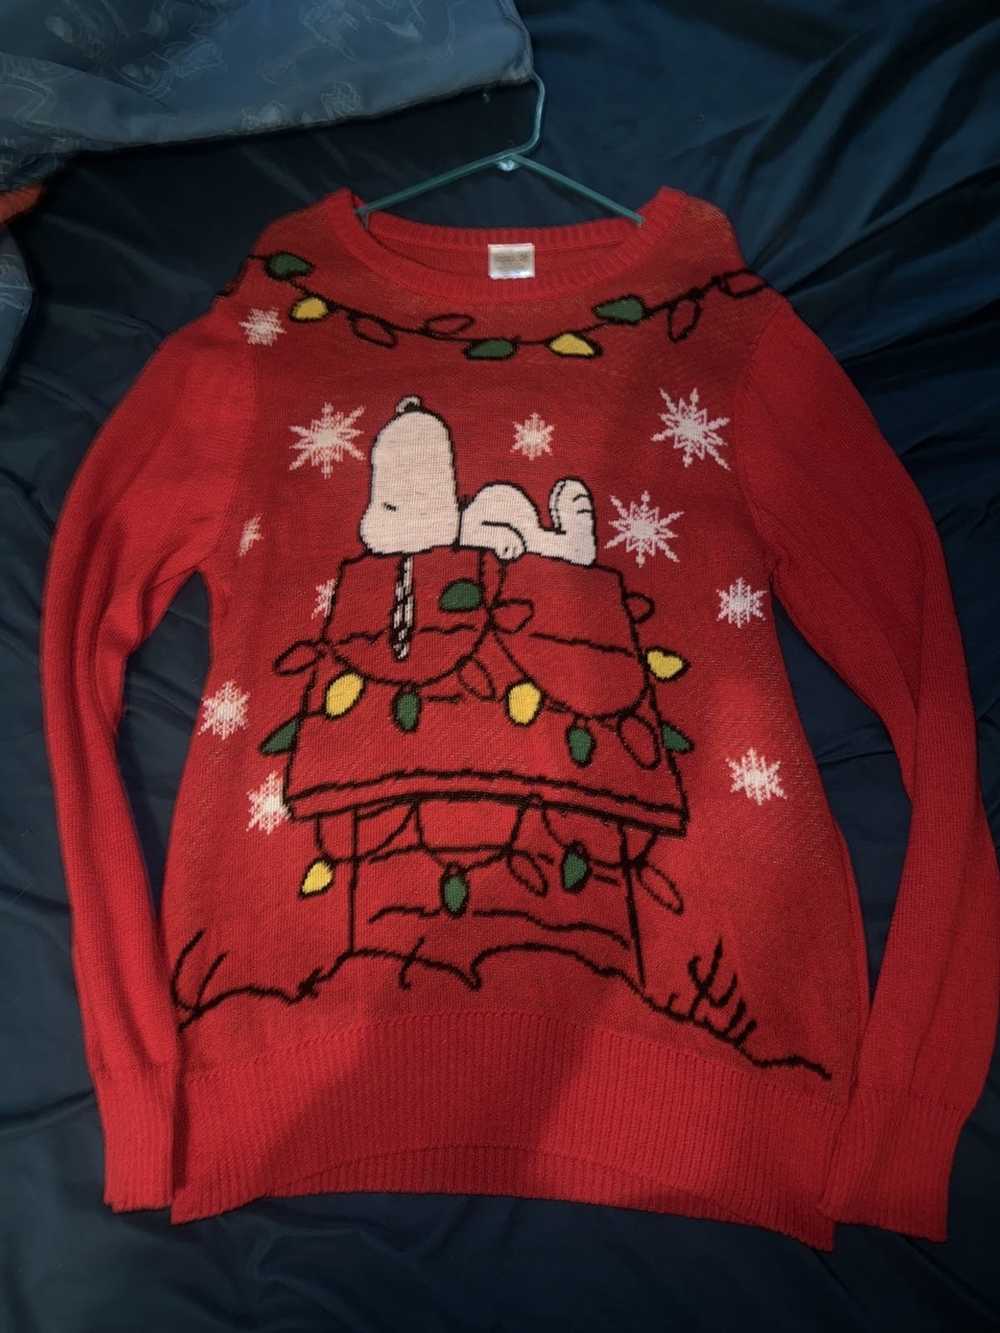 Santa Snoopy Riders Woodstock Merry Christmas Tampa Bay Lightning Sweater,  hoodie, sweater, long sleeve and tank top